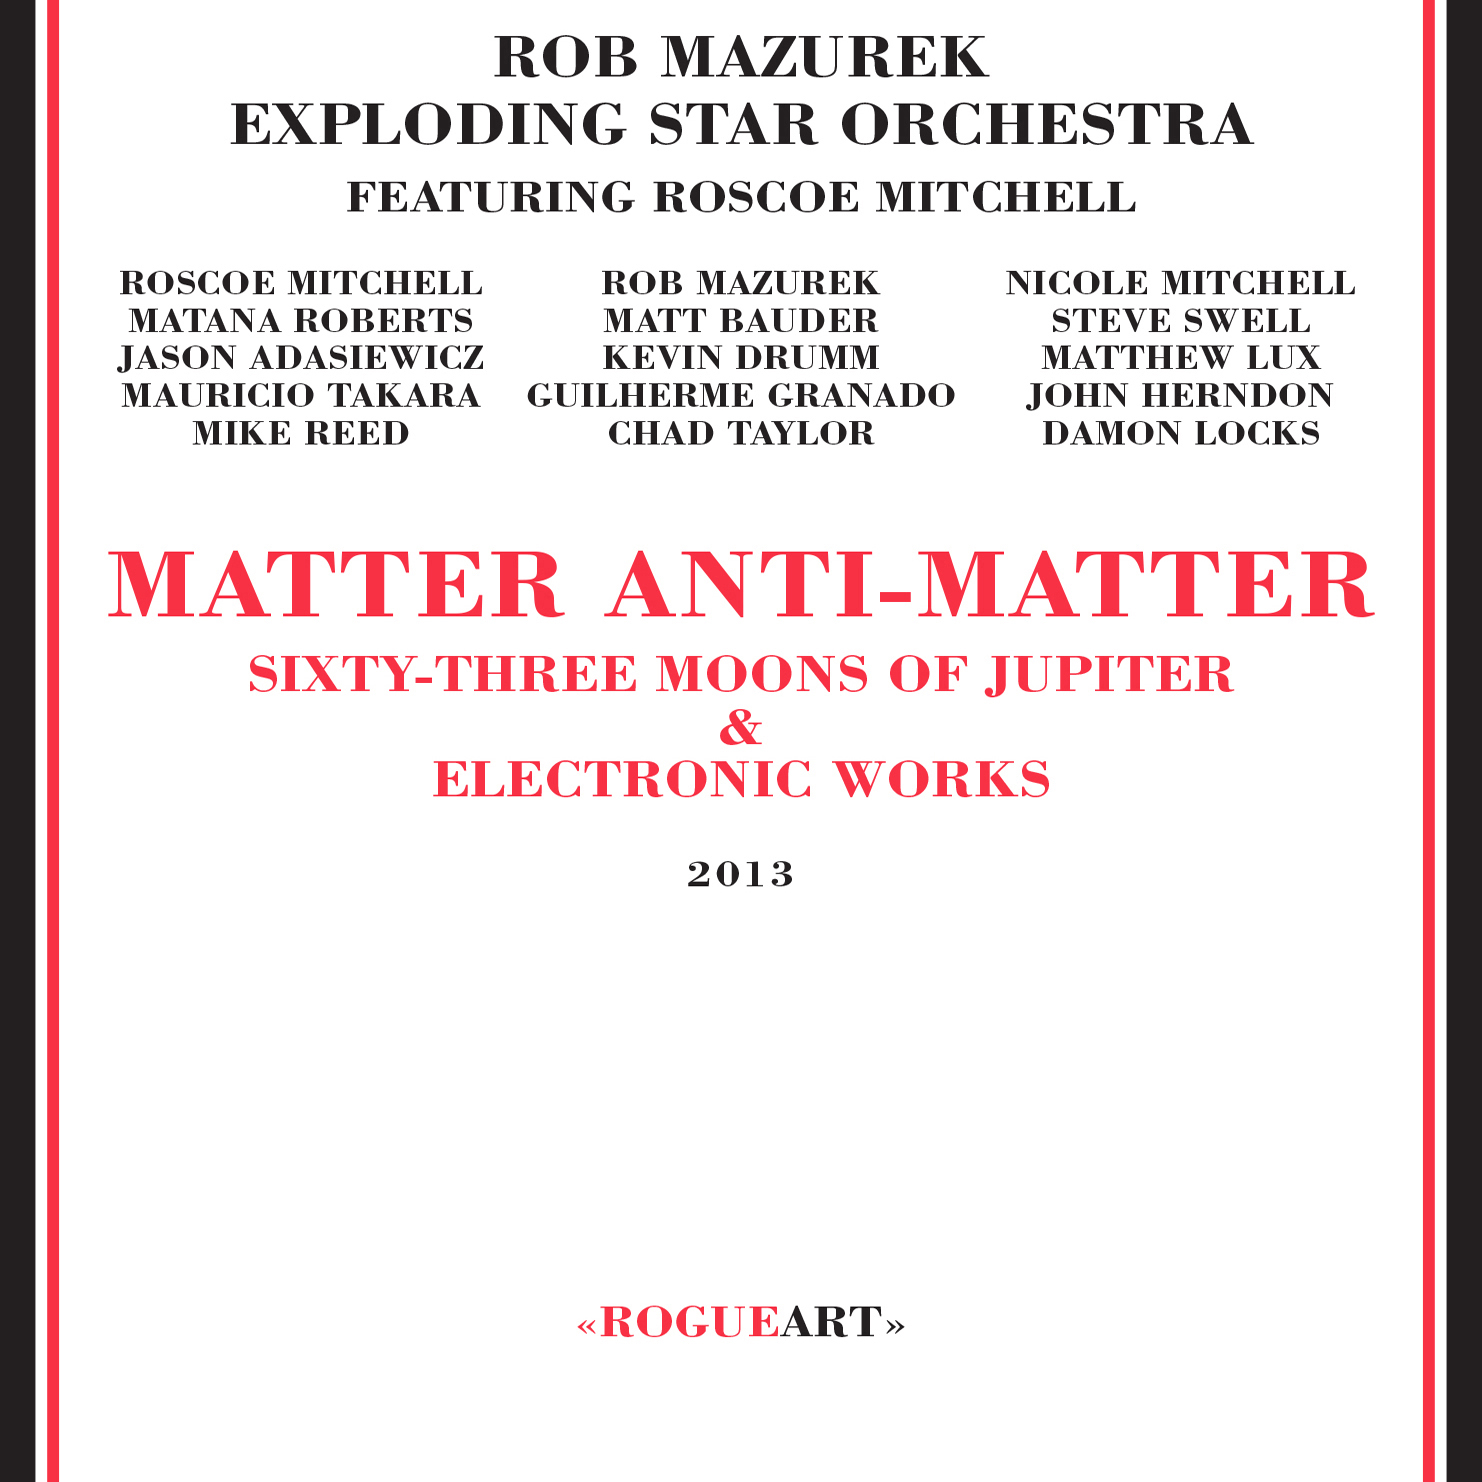 Rob Mazurek Exploding Star Orchestra Featuring Roscoe Mitchell - Matter Anti-matter